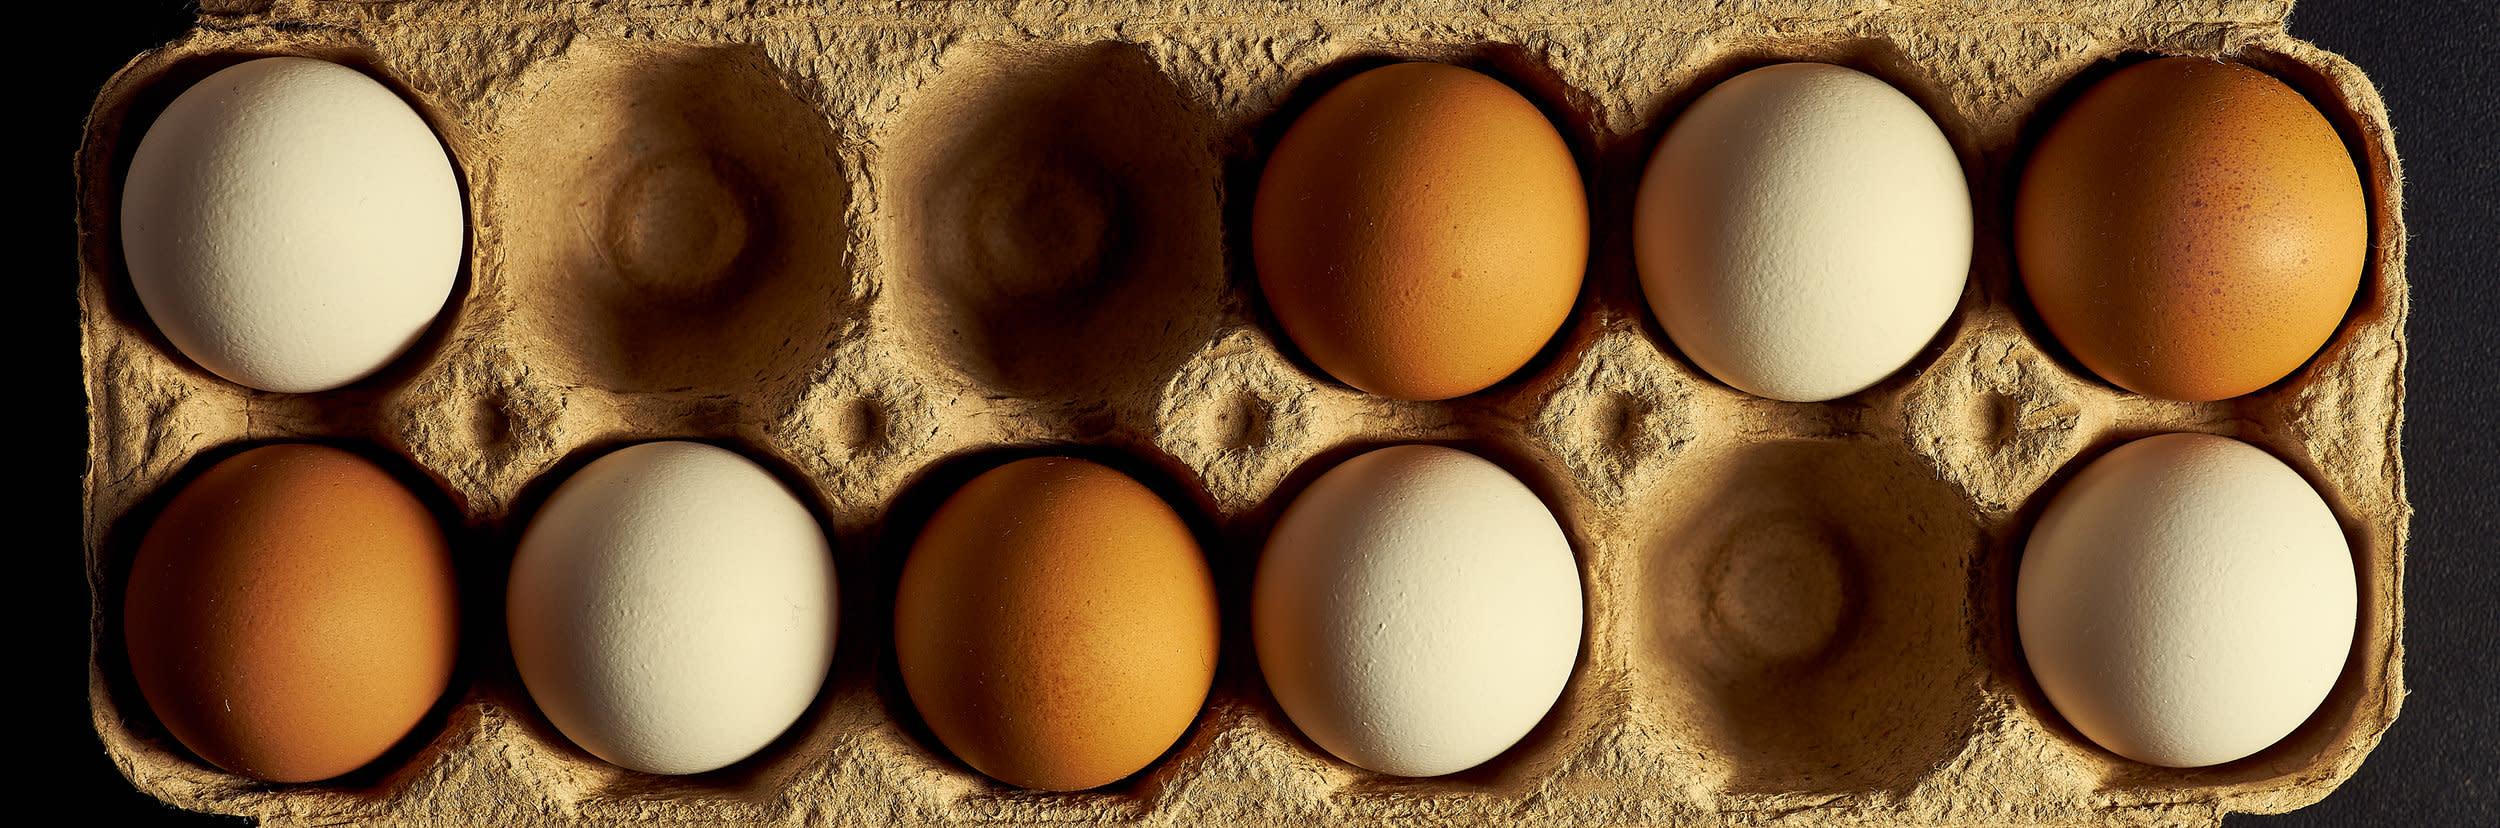 Robert Greatrix Landscape Photograph - The Eggs